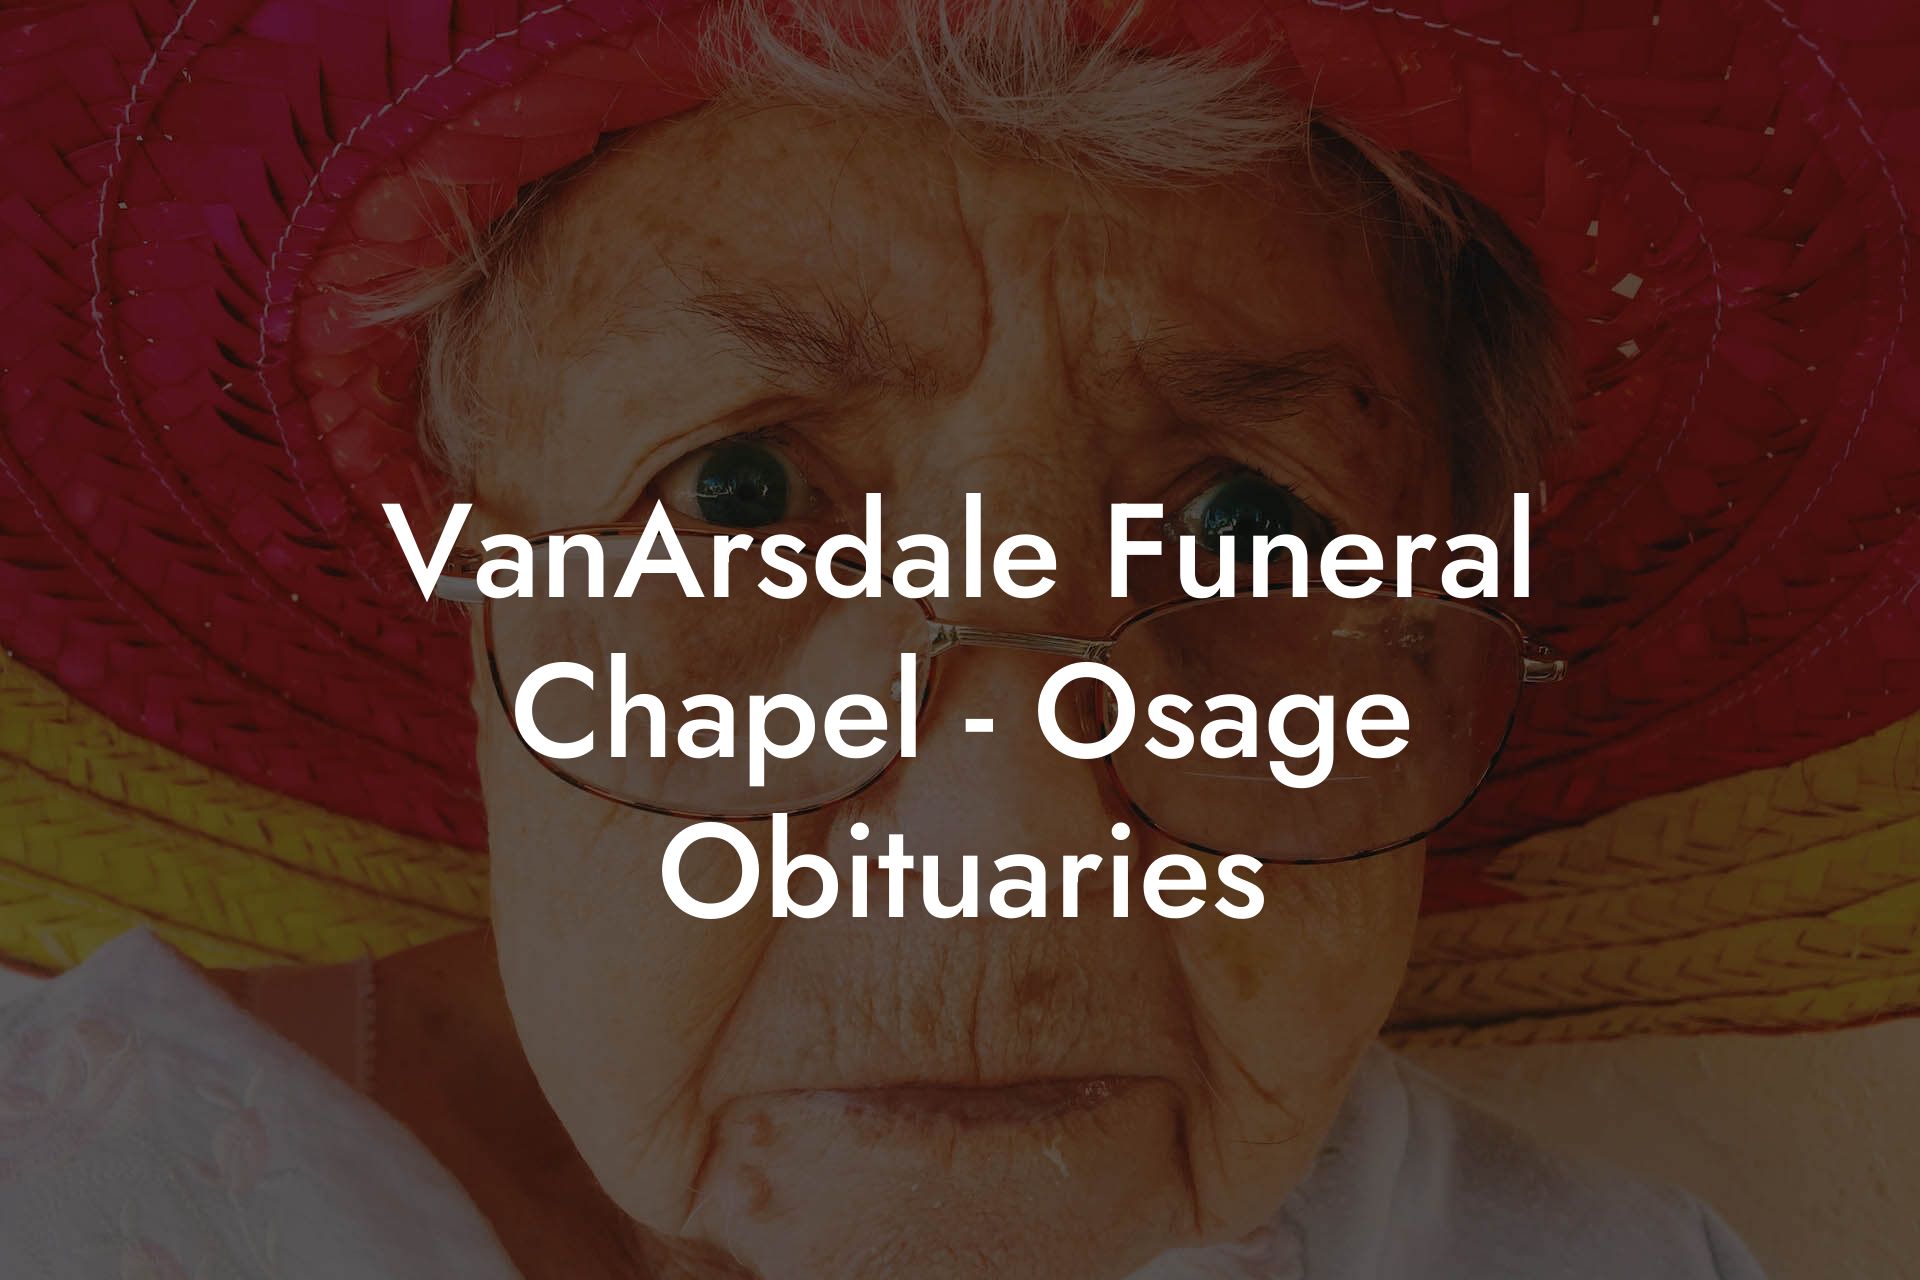 VanArsdale Funeral Chapel - Osage Obituaries